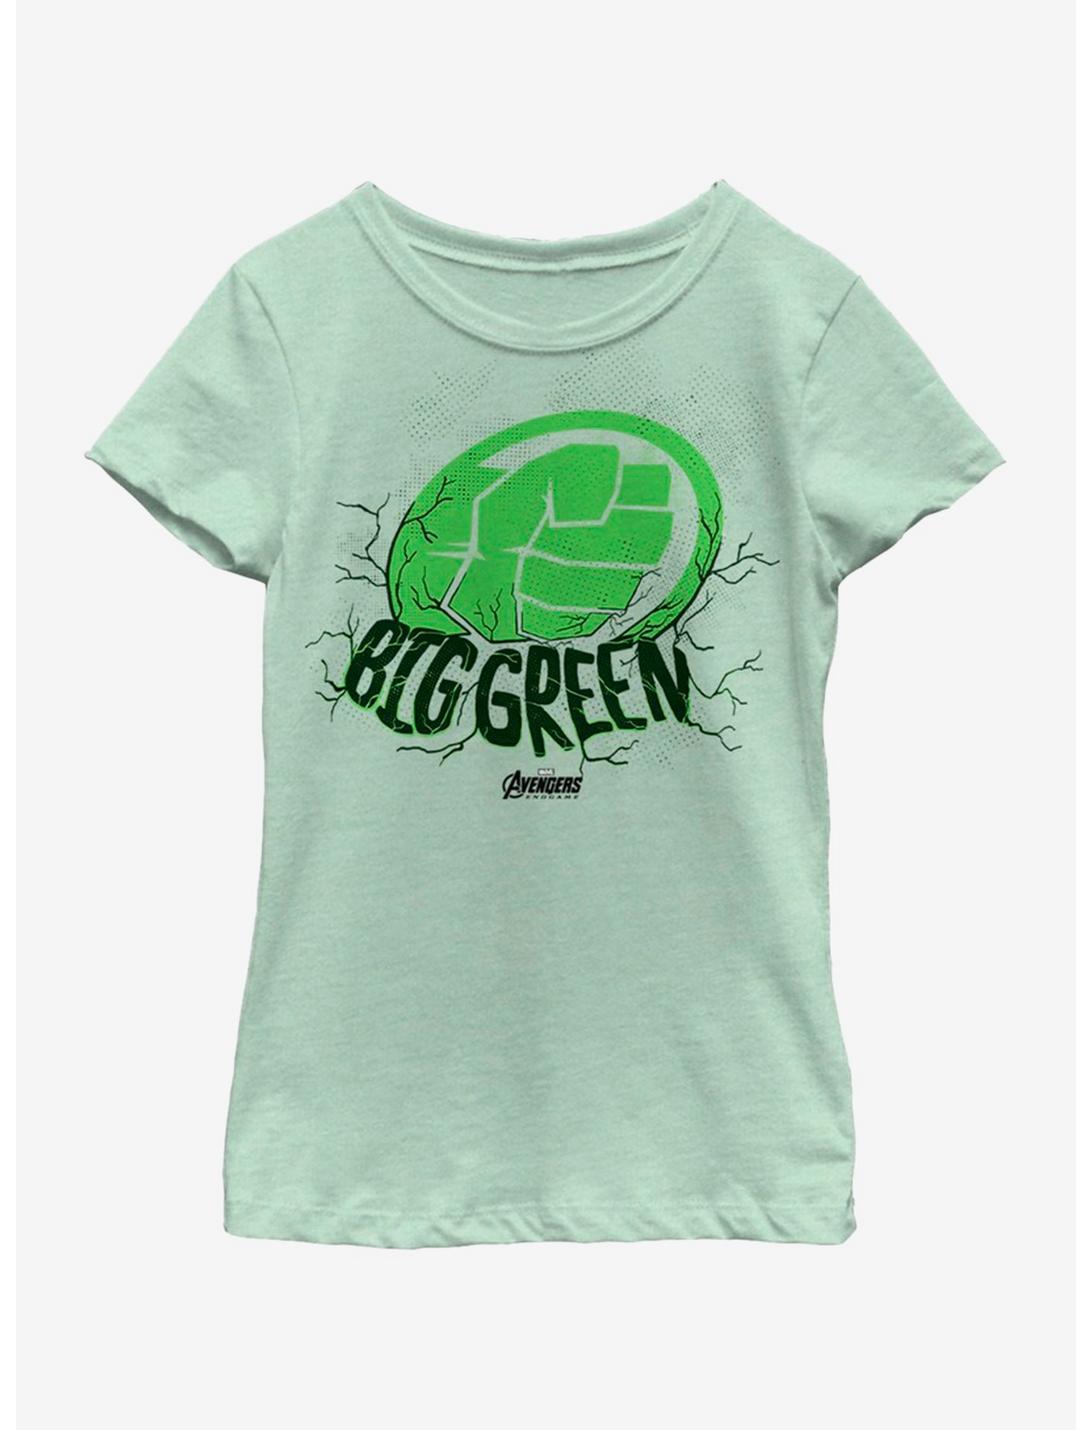 Marvel Avengers: Endgame Big Green Youth Girls T-Shirt, MINT, hi-res